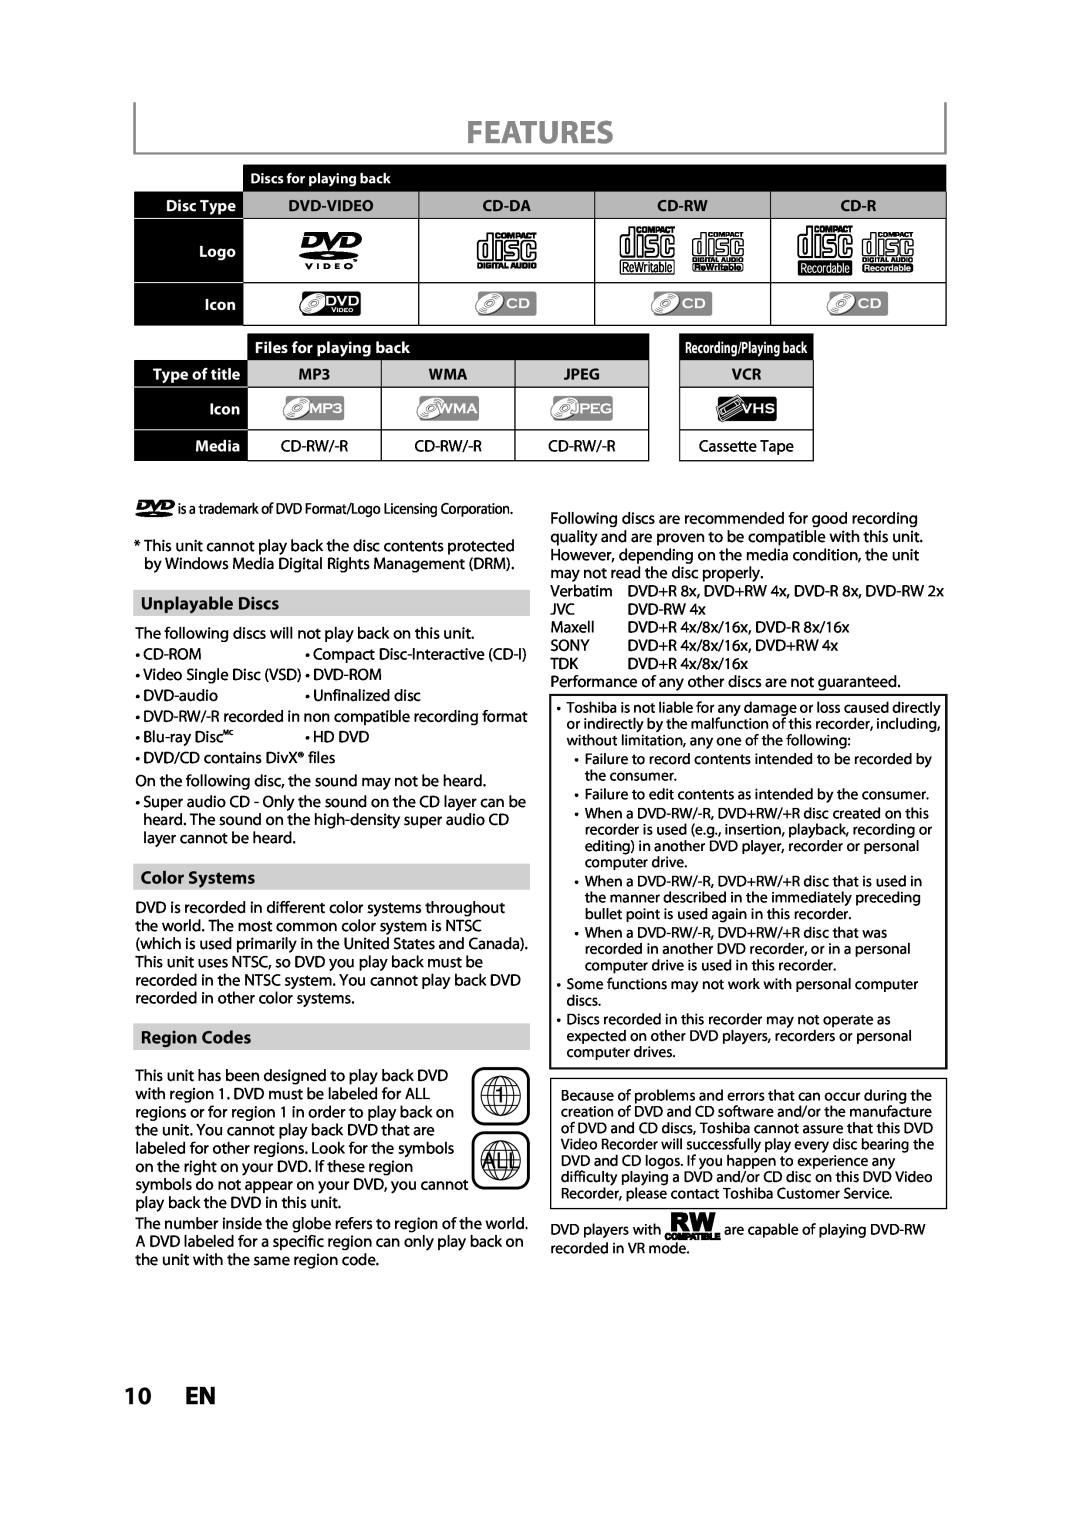 Toshiba DVR620KC owner manual 10 EN, Unplayable Discs, Color Systems, Region Codes, Features 